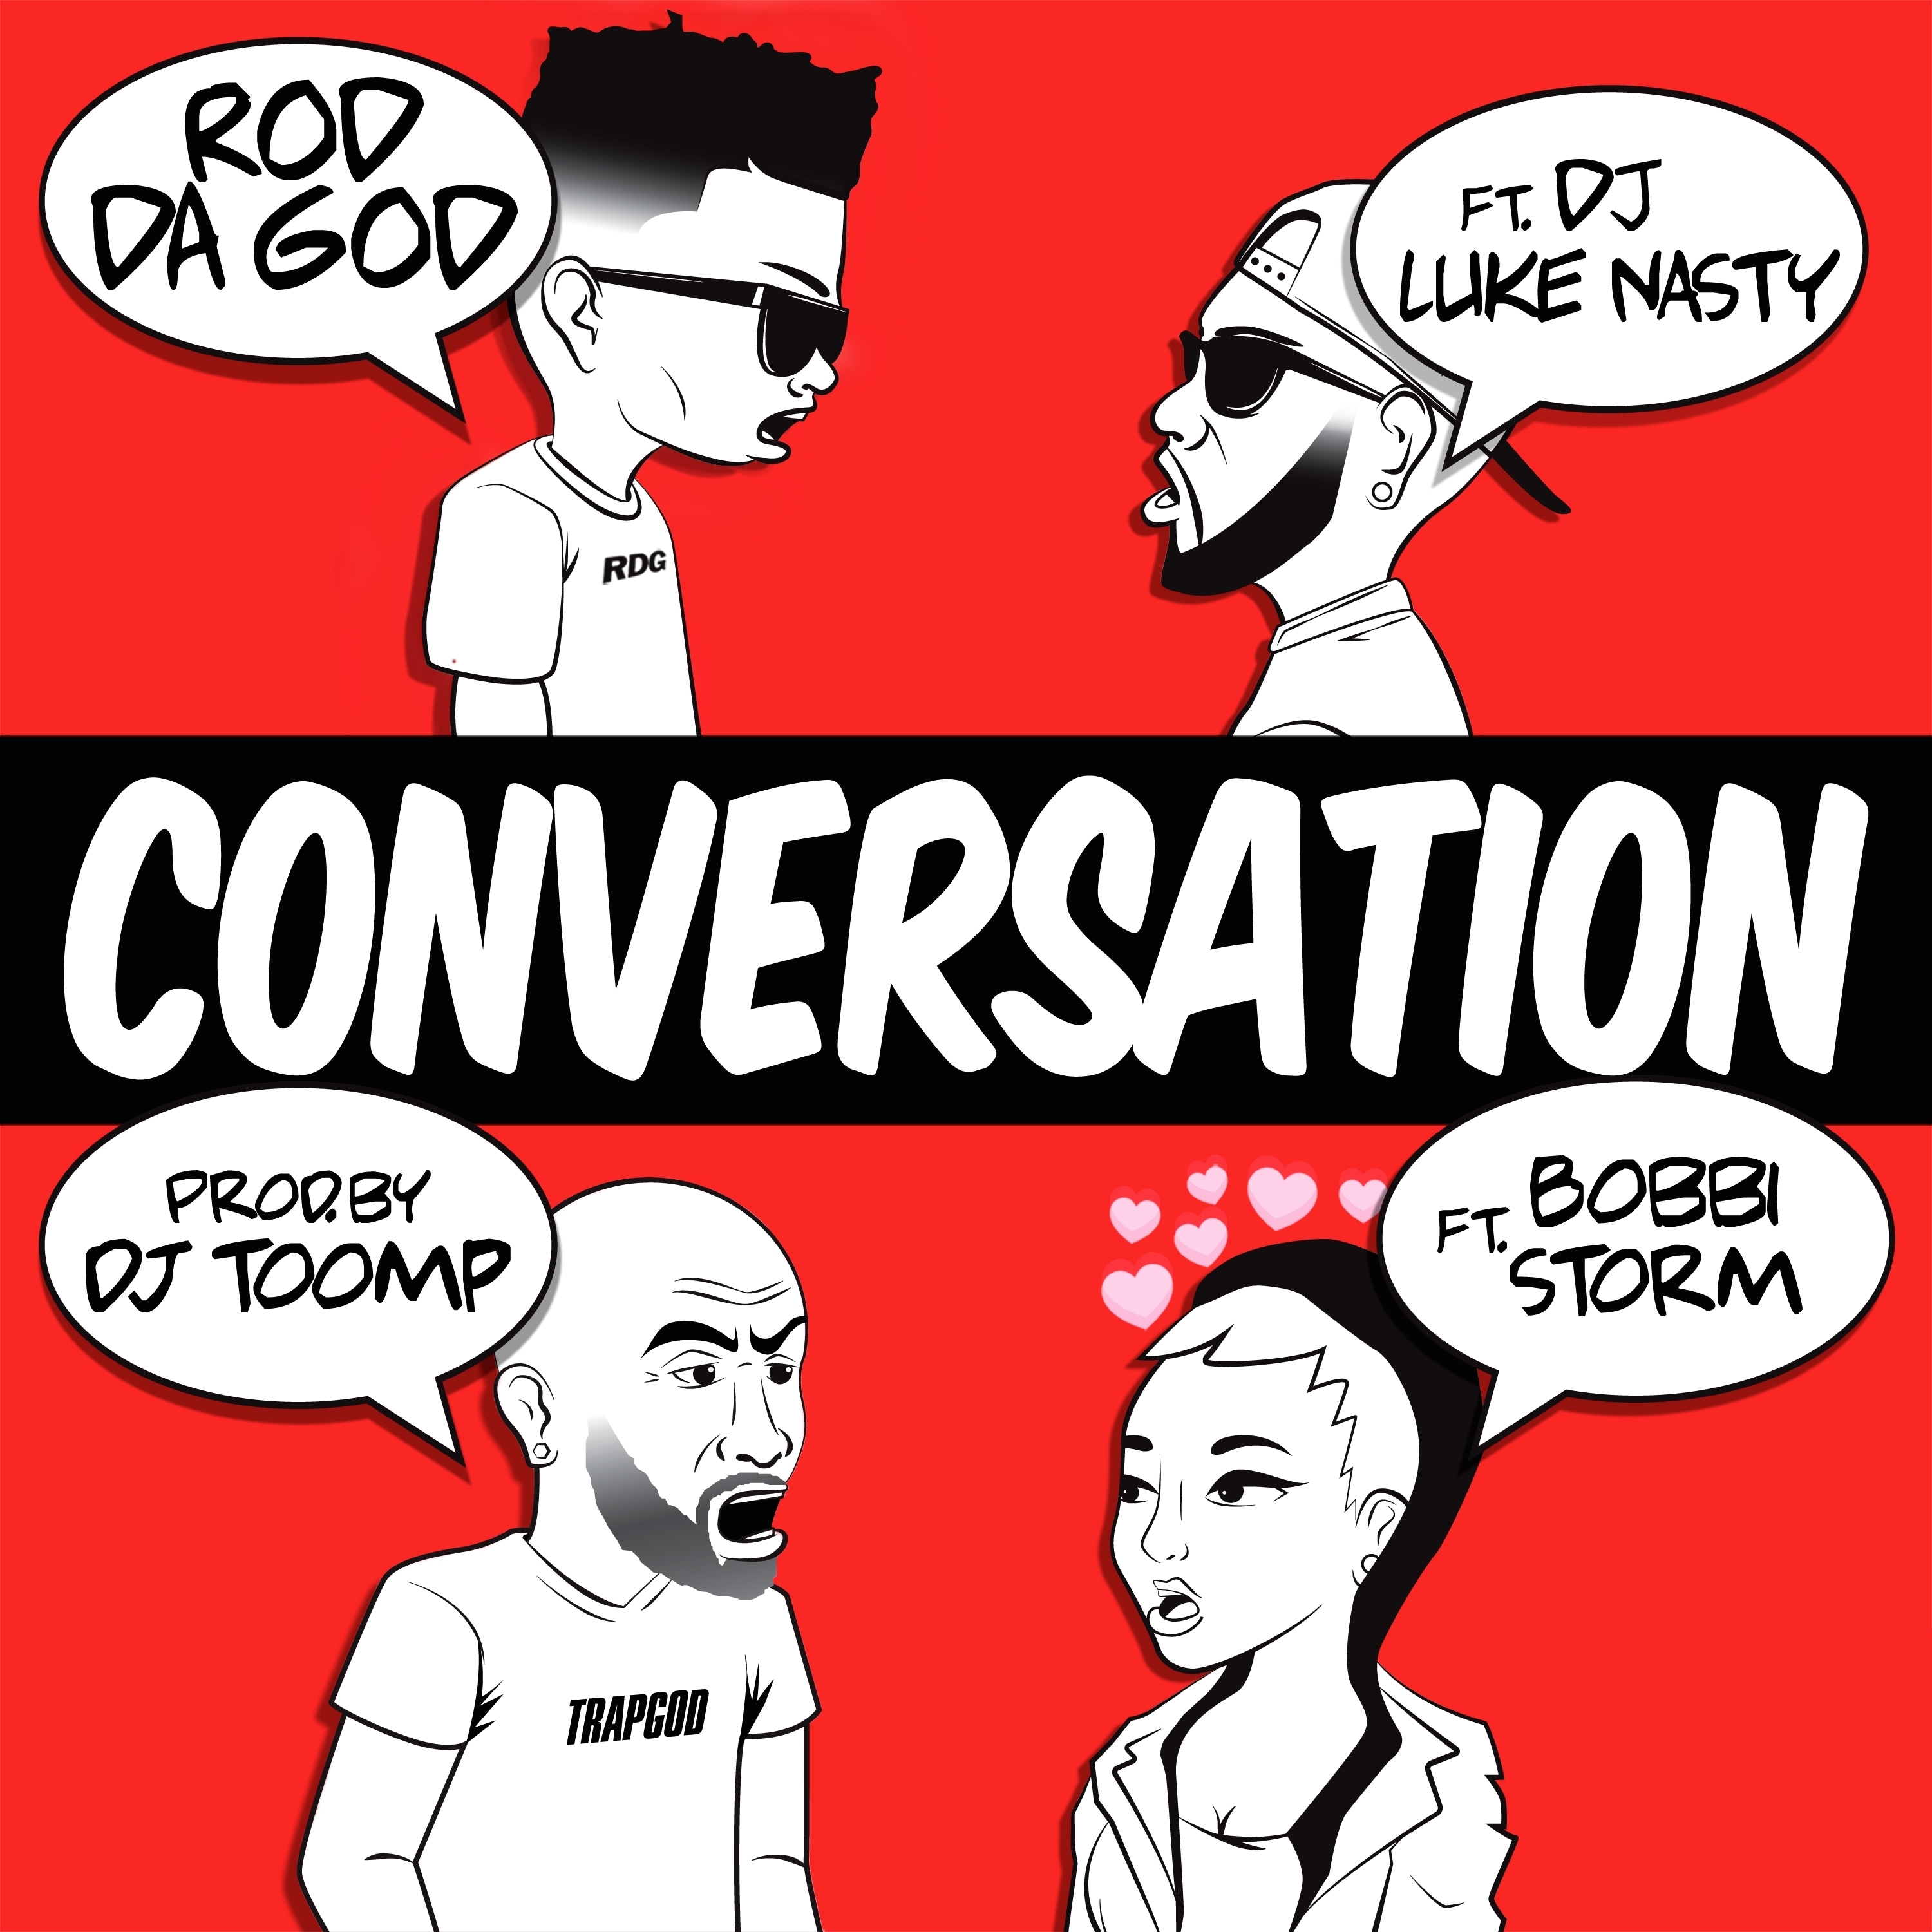 Conversation (feat. DJ Luke Nasty & Bobbi Storm)